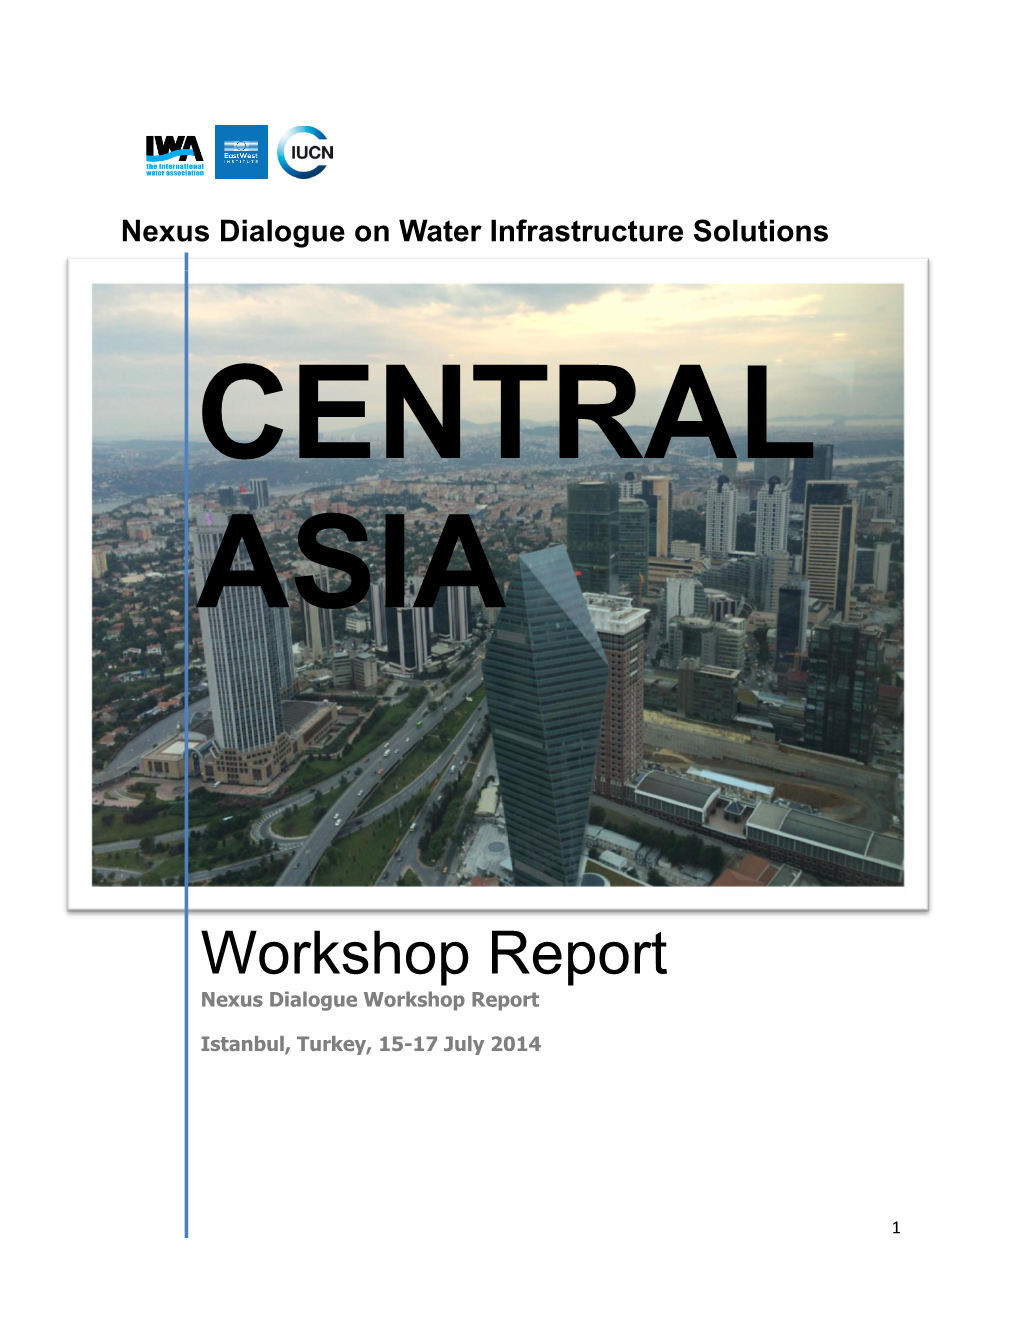 Central Asia Nexus Dialogue Workshop Report